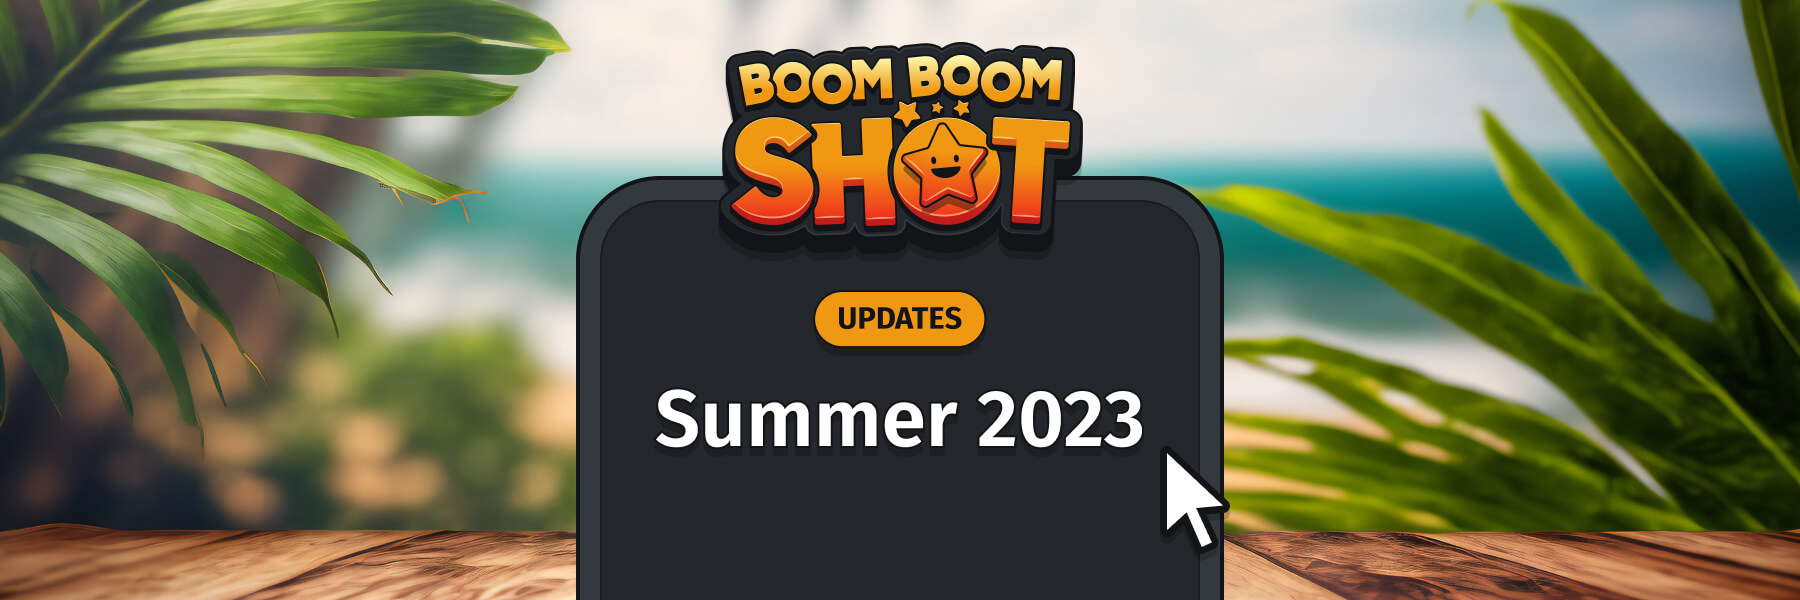 Boom Boom Shot Product Updates Summer 2023